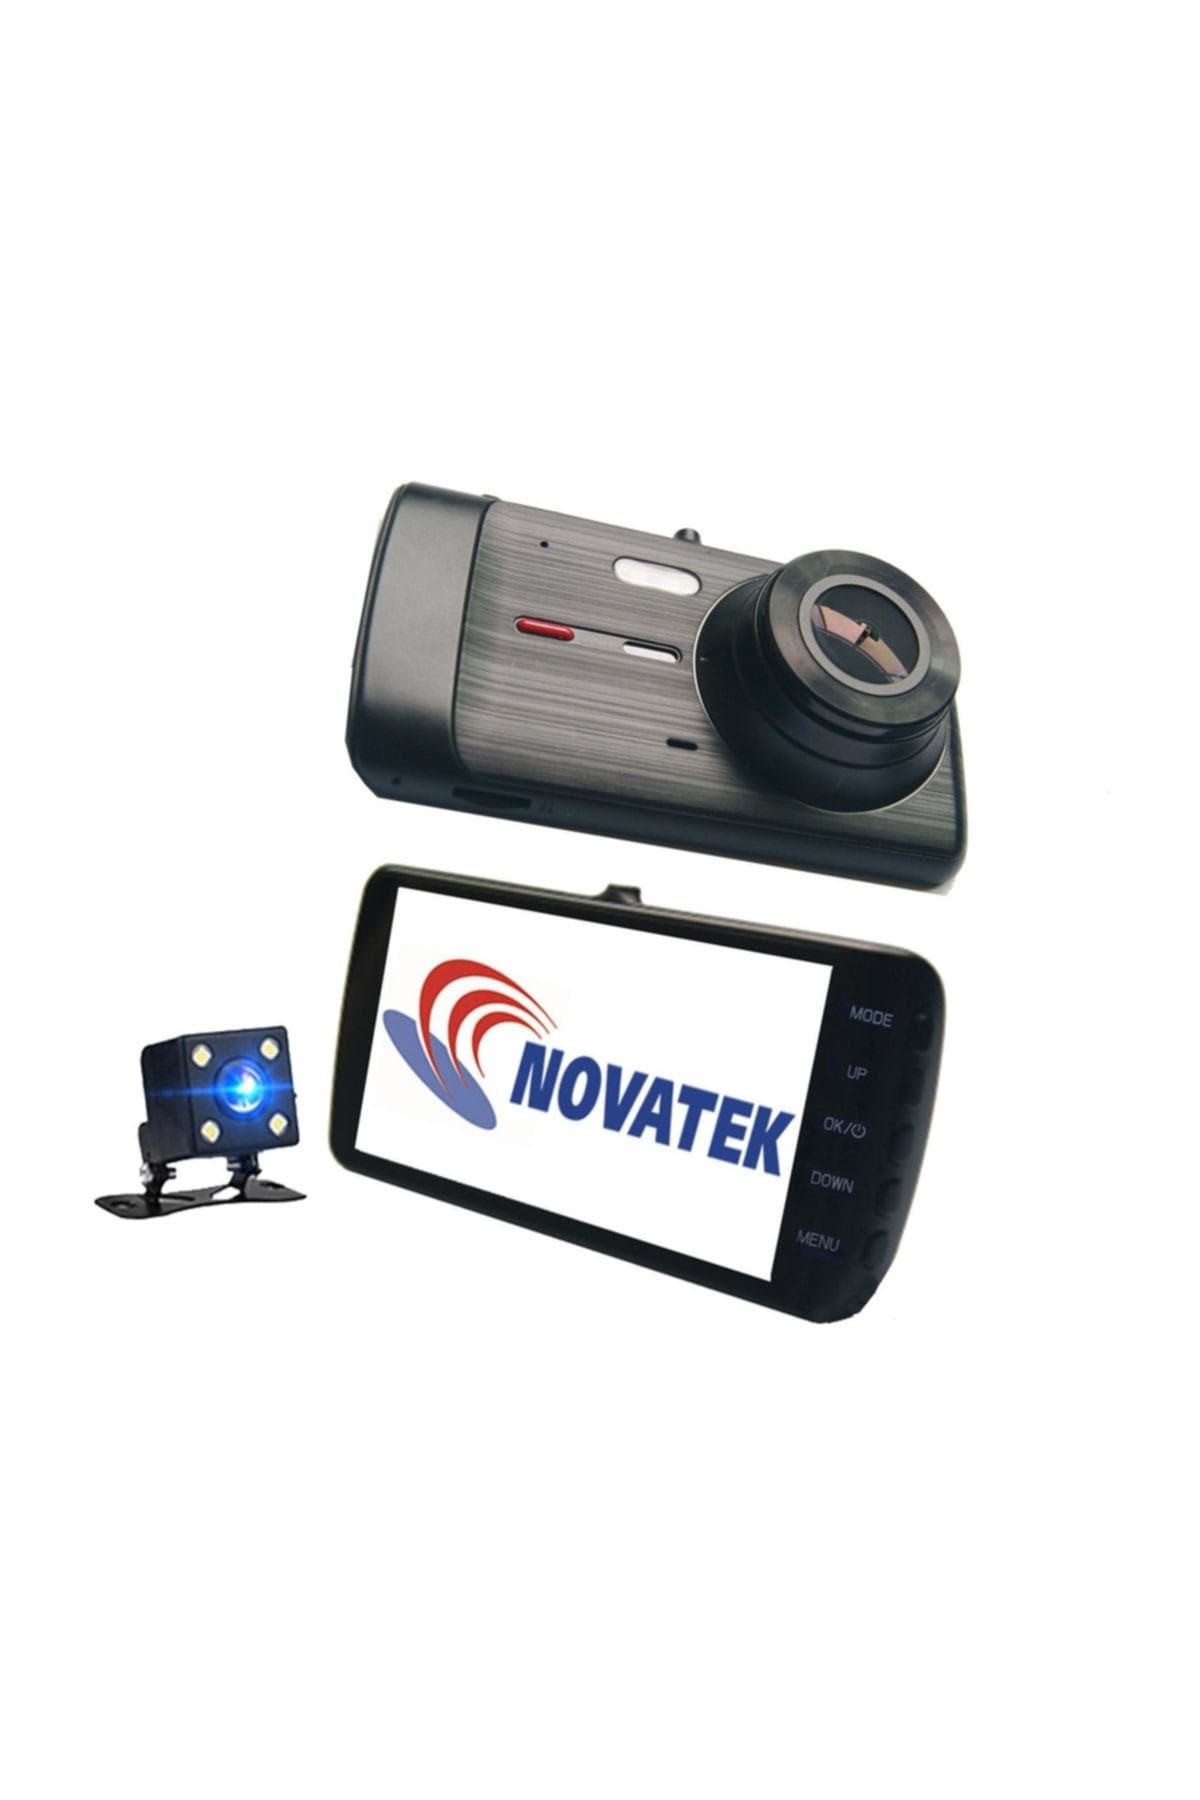 Novatek Nt92d Full Hd 1080p 14mp 64gb Kart Destekli Araç Kamerası